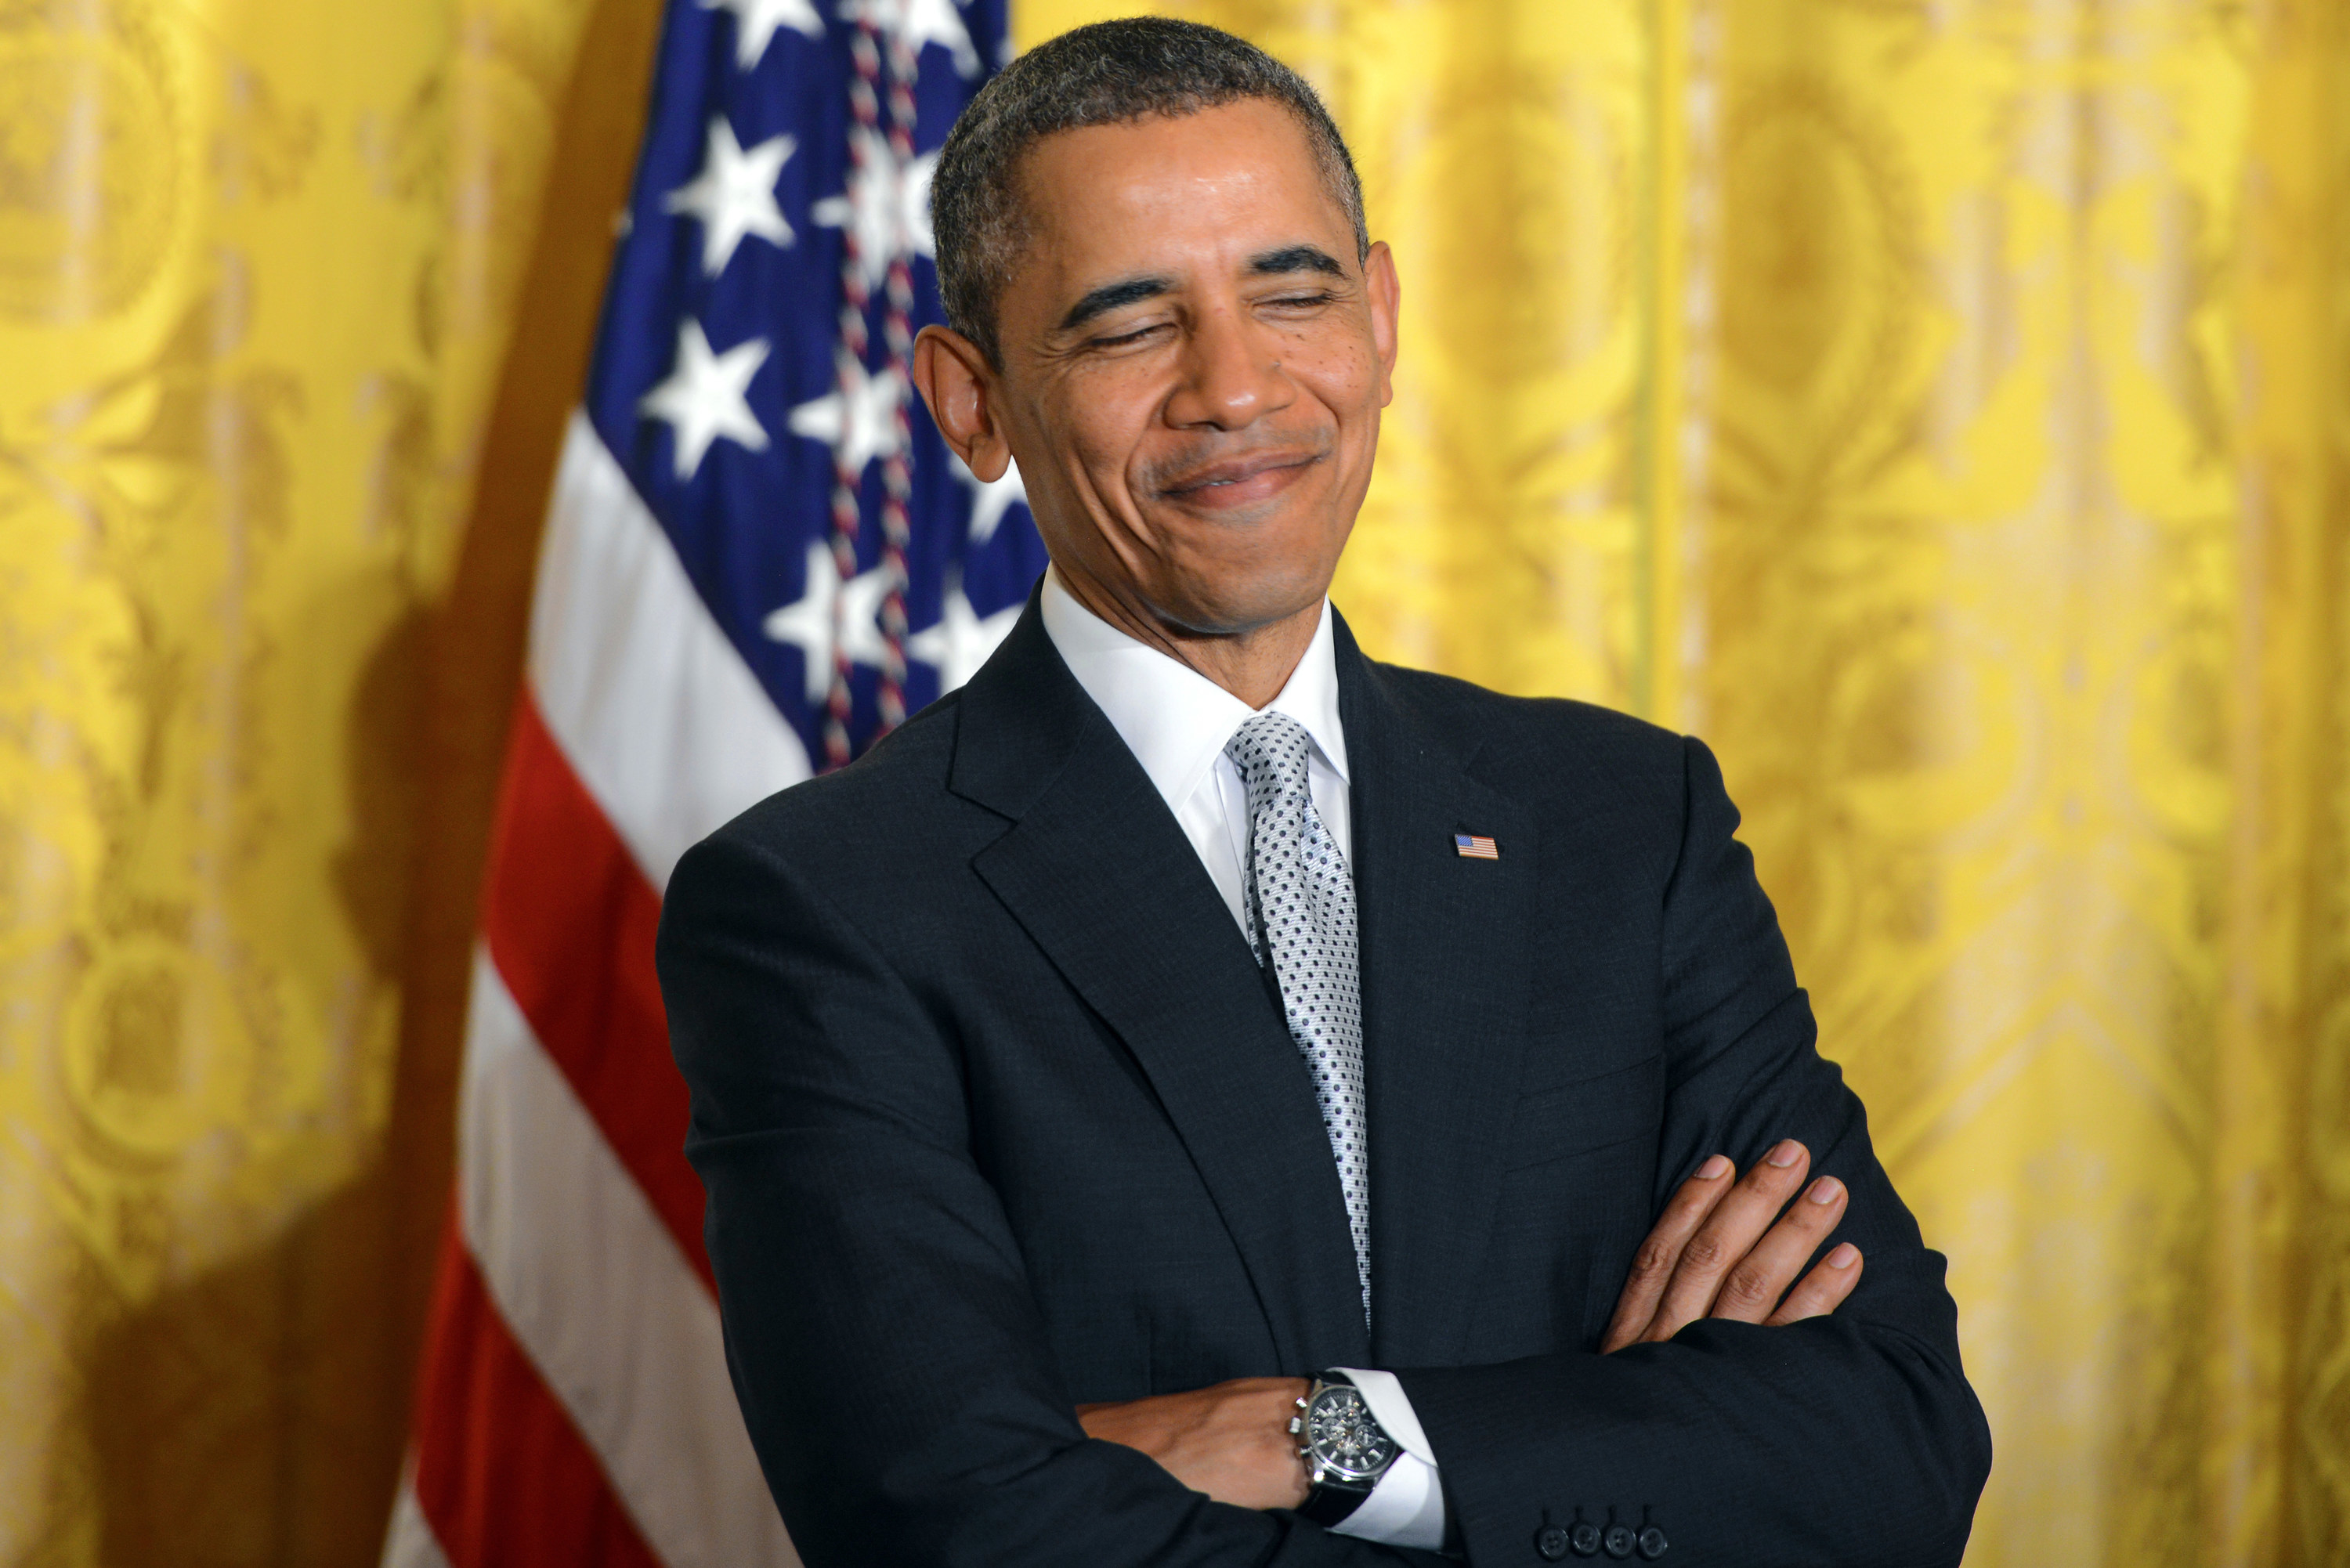 President Barack Obama smiles